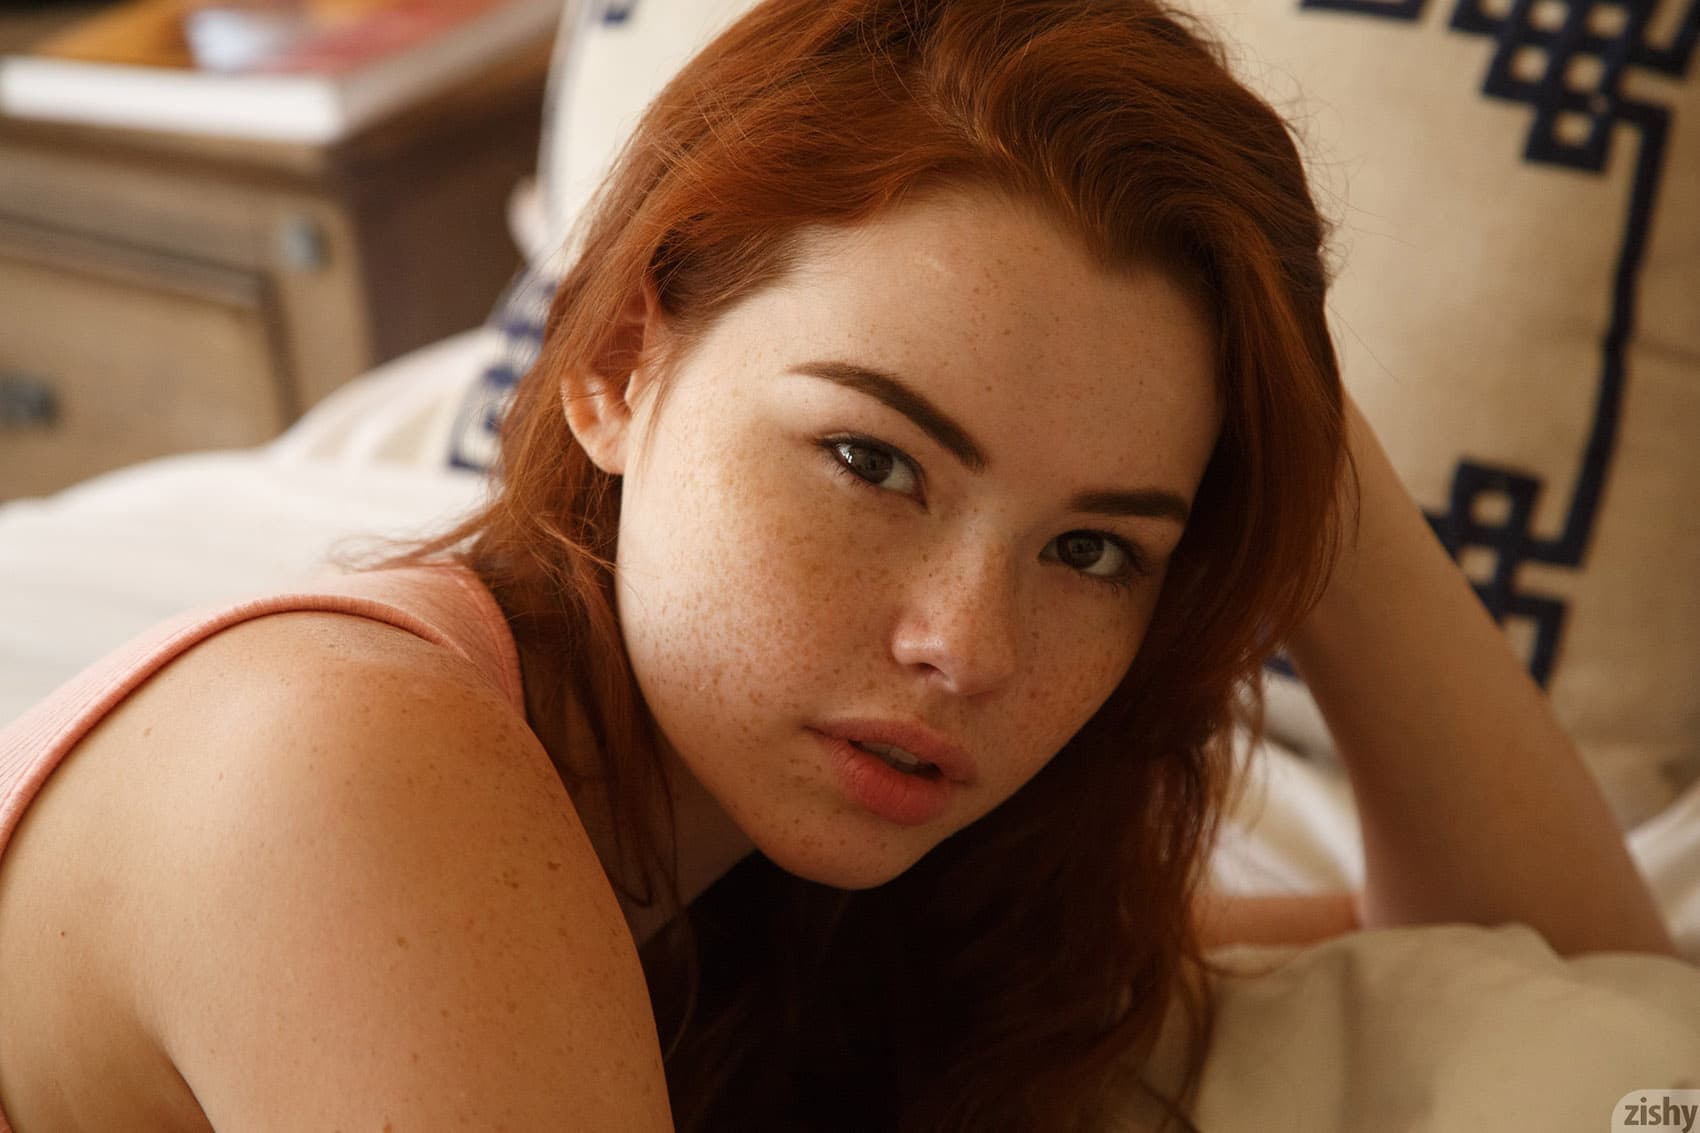 People 1700x1133 Sabrina Lynn face redhead bed Zishy women American women freckles watermarked closeup